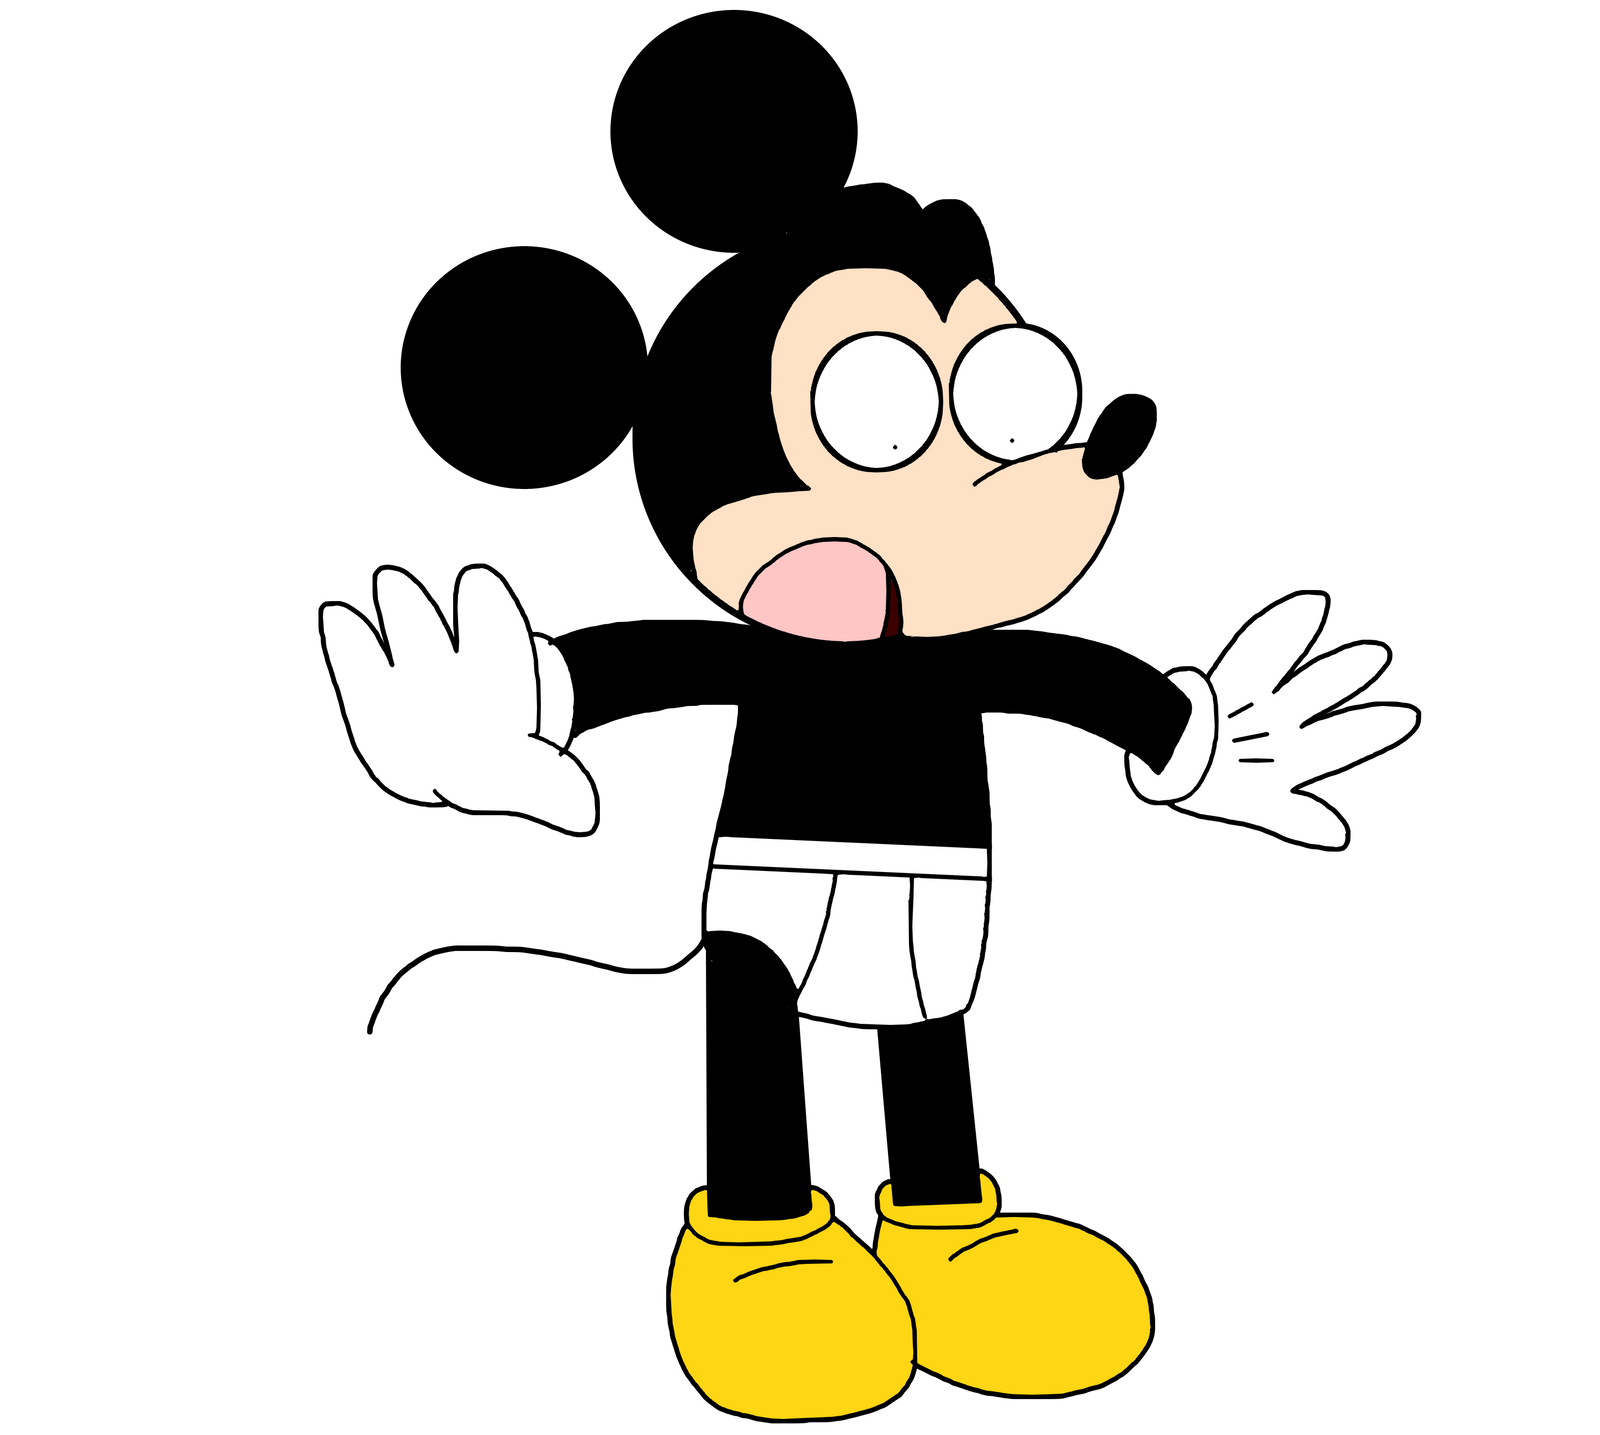 Mickey shockes to see in underwear by Ultra-Shounen-Kai-Z on